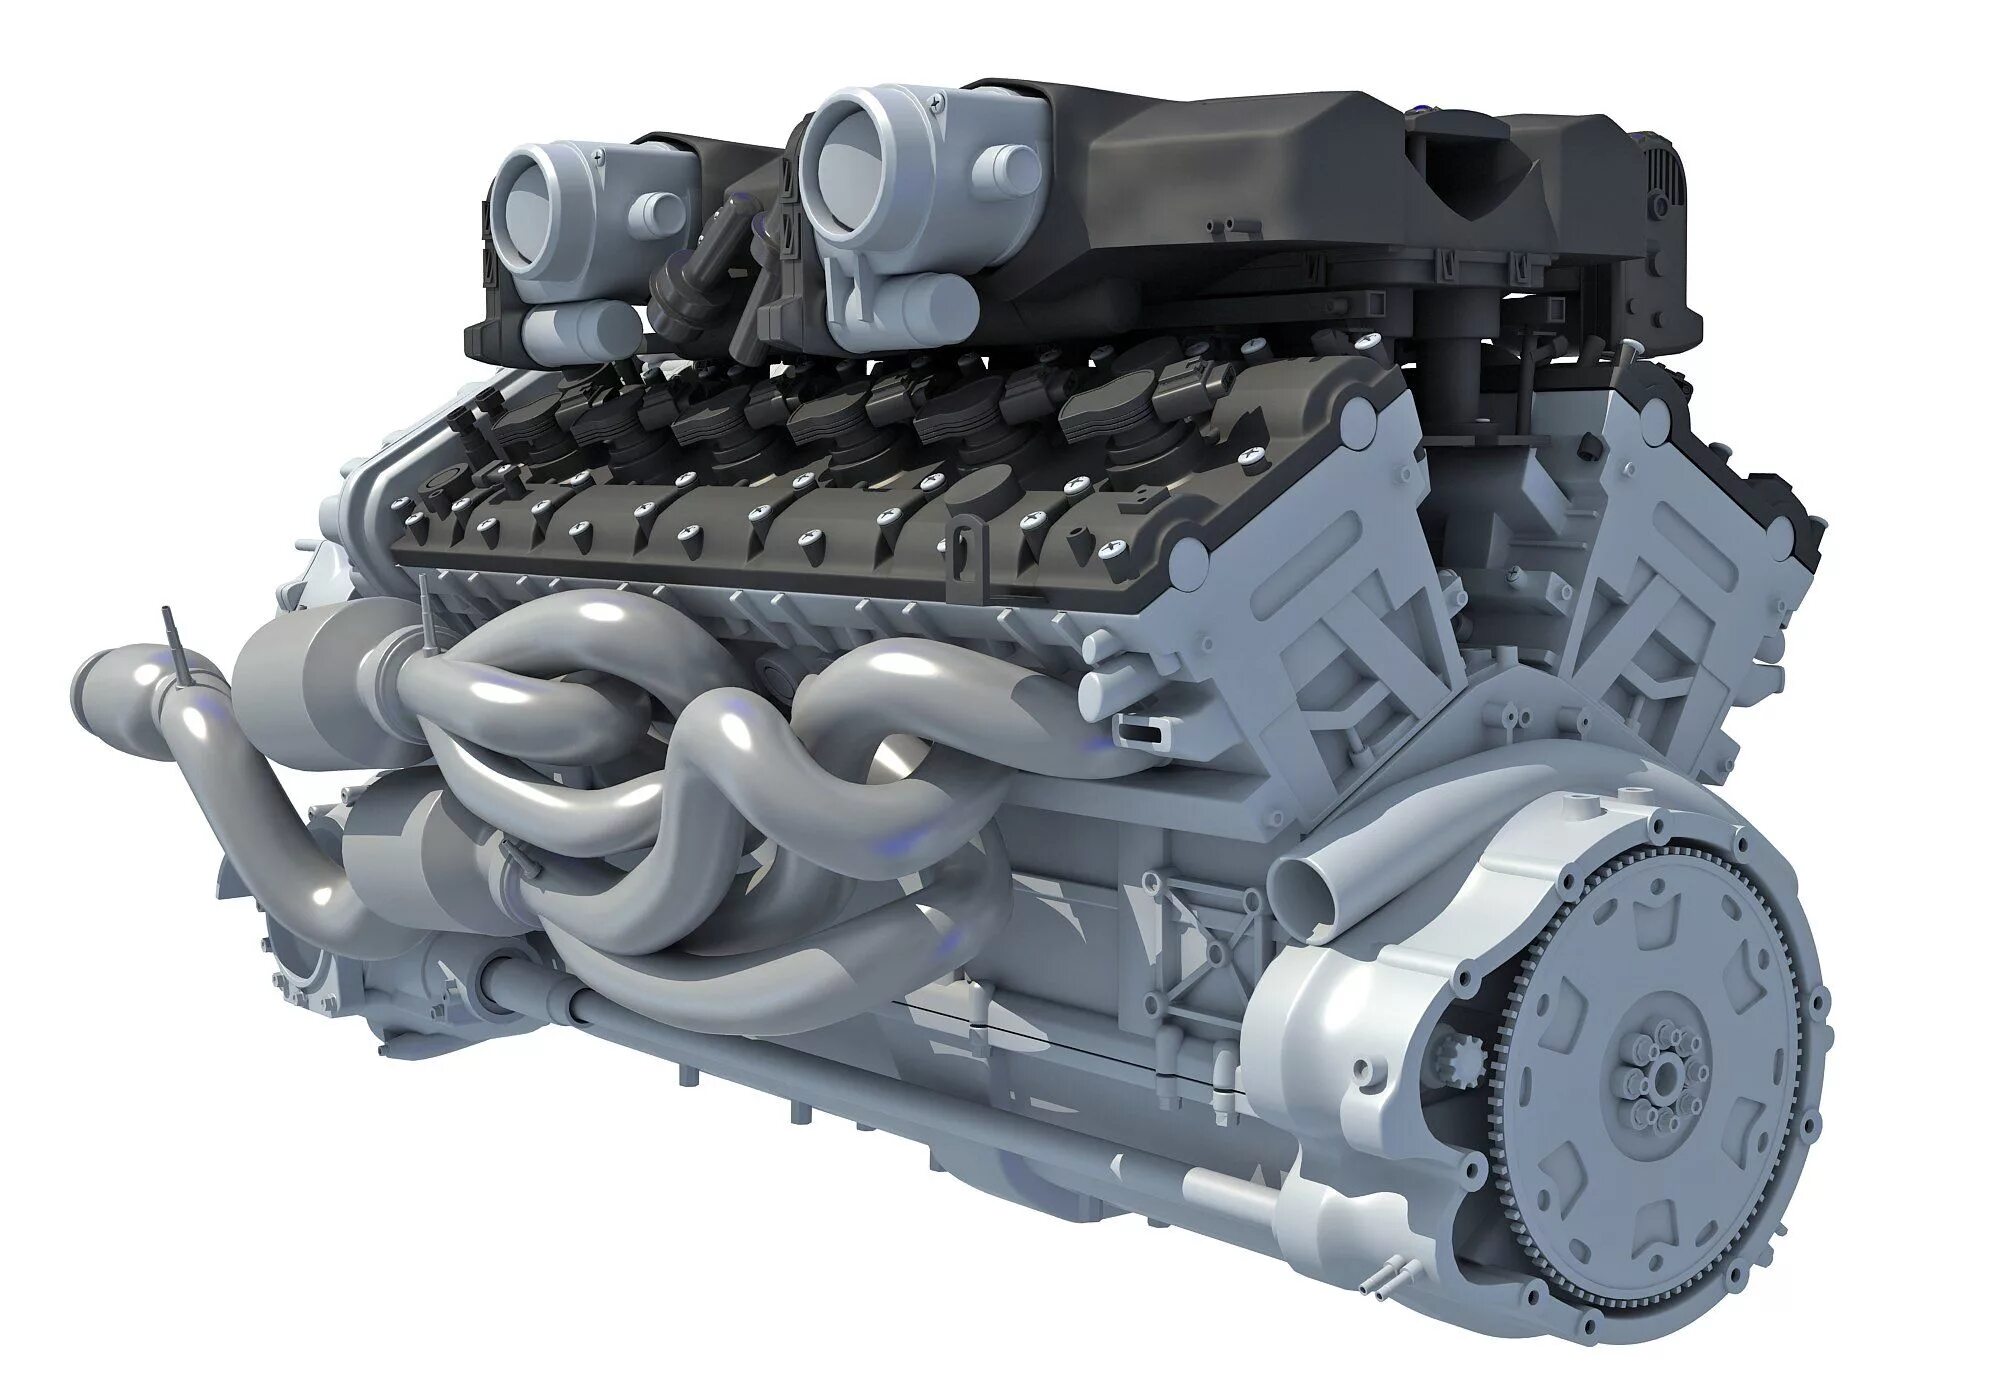 D3 d5. V12 engine 3d model. V12 двигатель. 3d модель двигателя ea888. 3d модель двигателя Mersedes 3341.